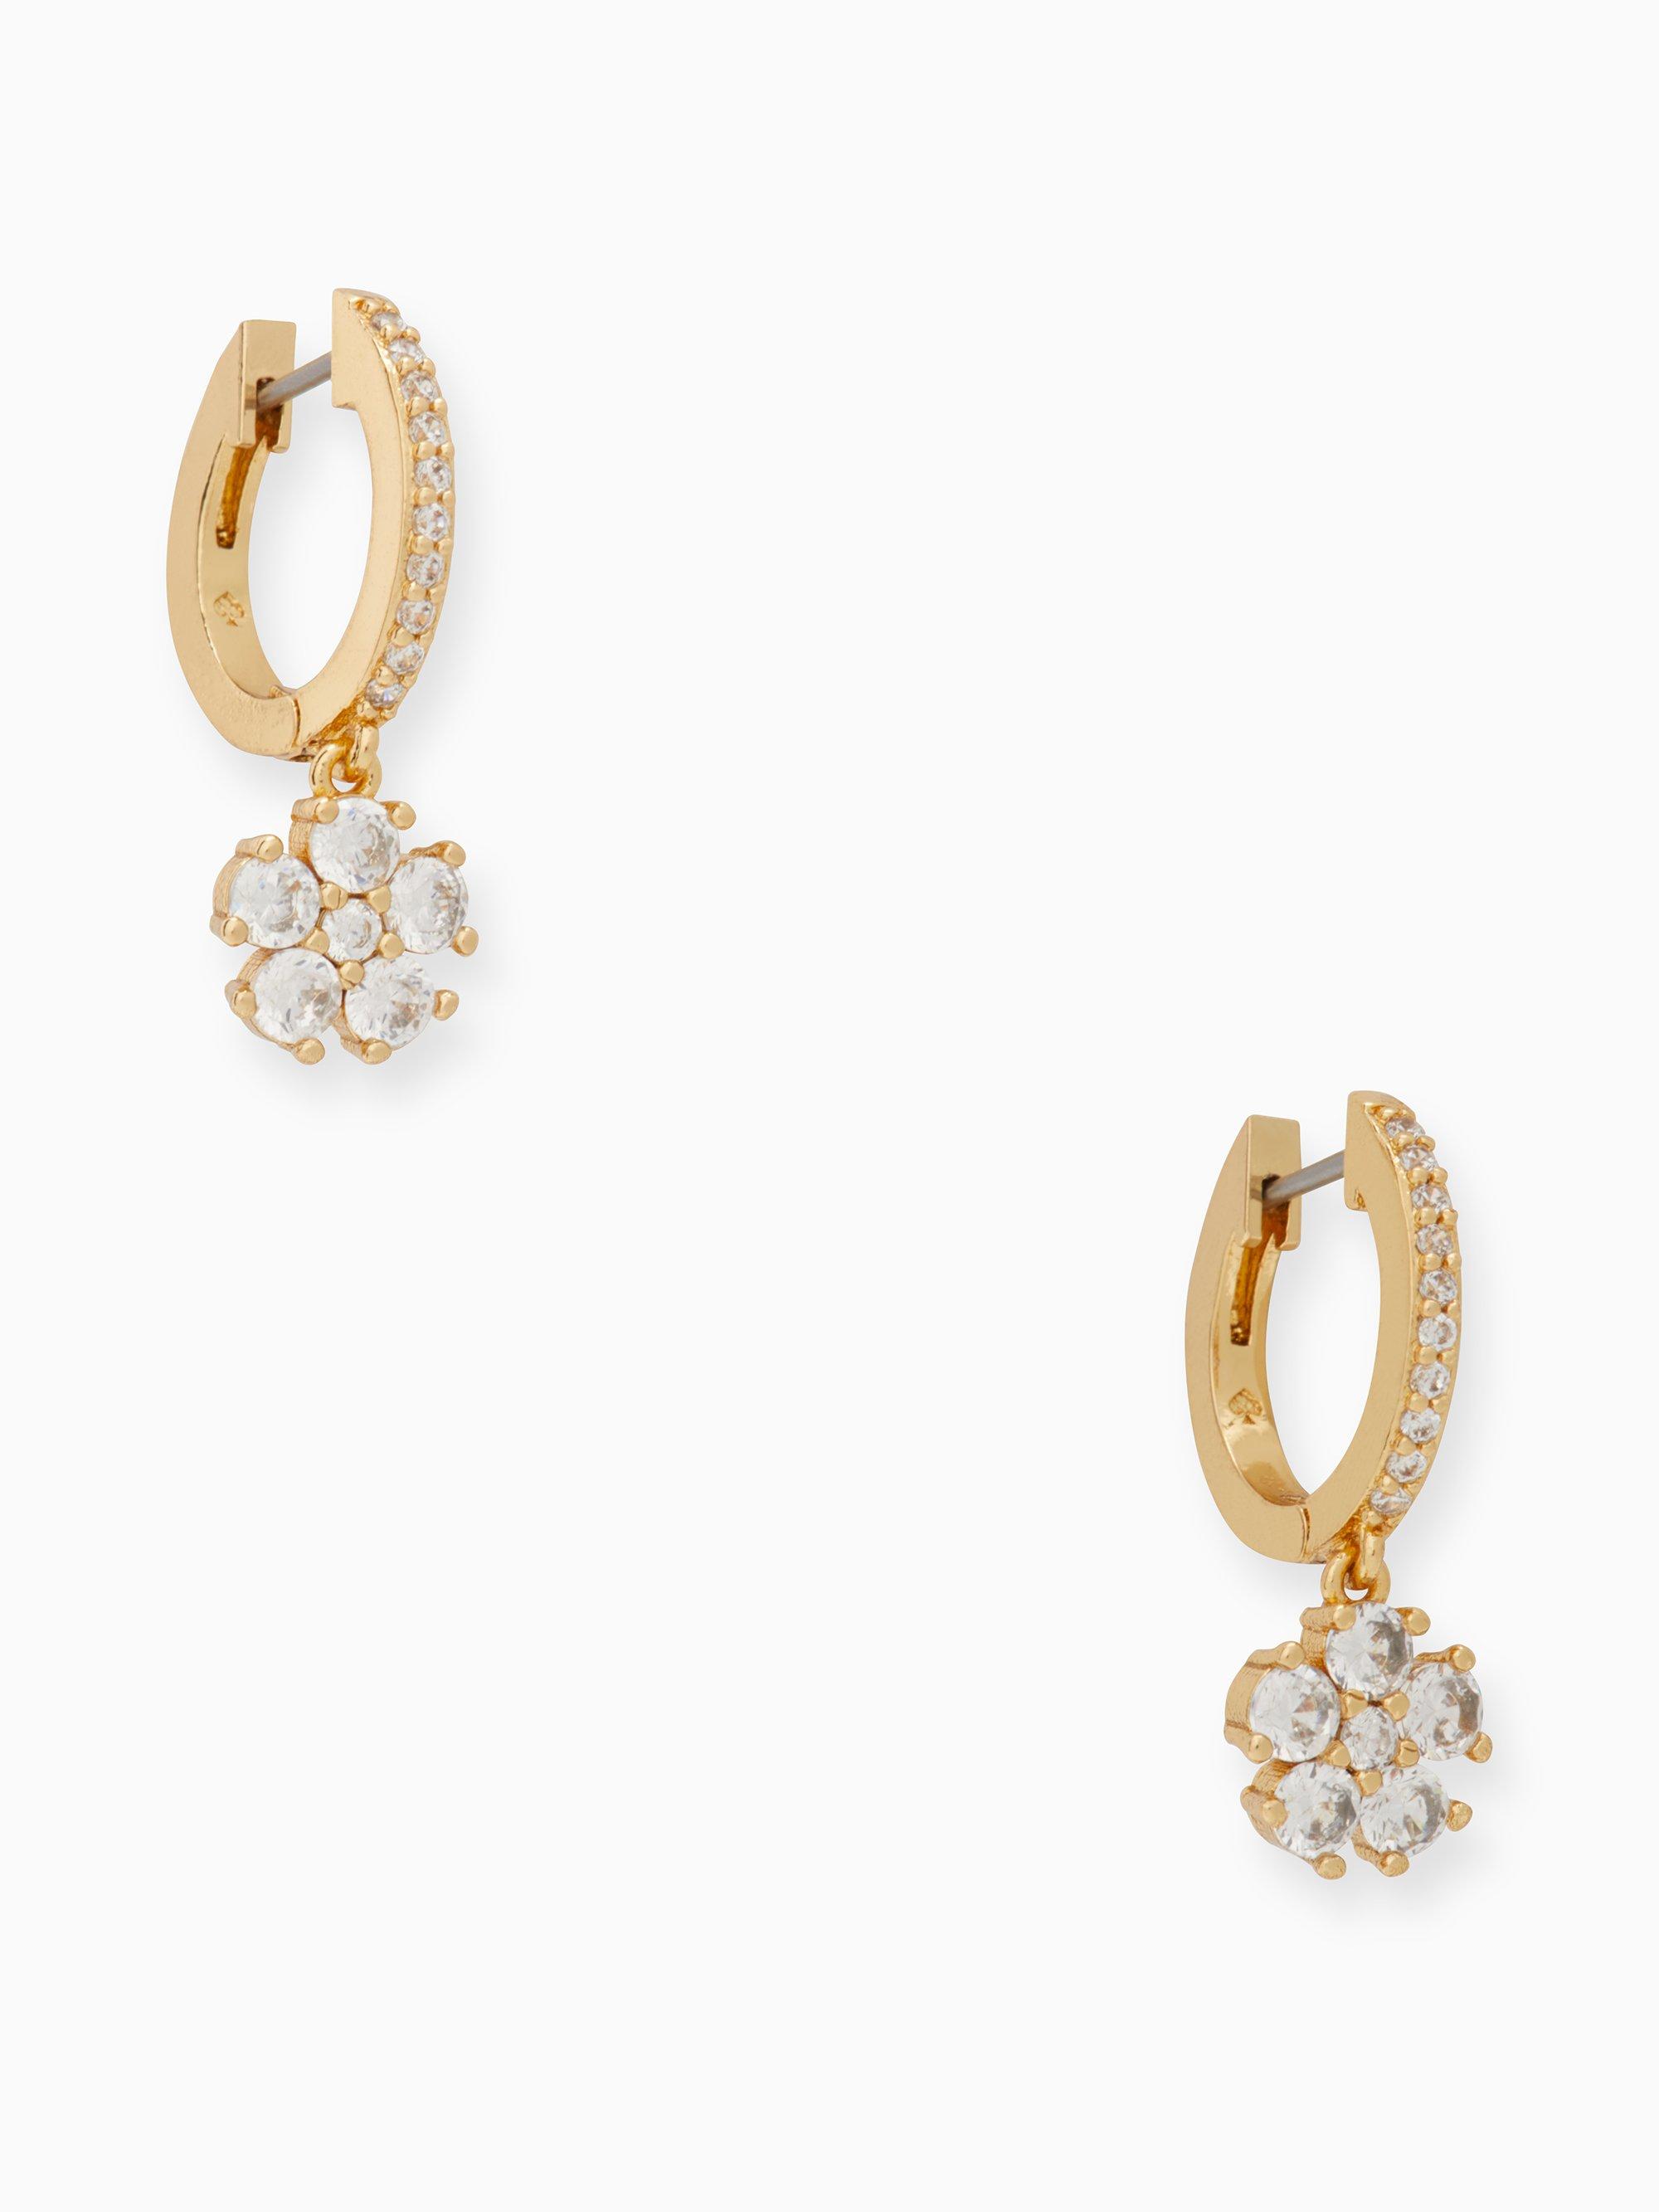 Flower Stud Earrings With White Pearls - Etsy